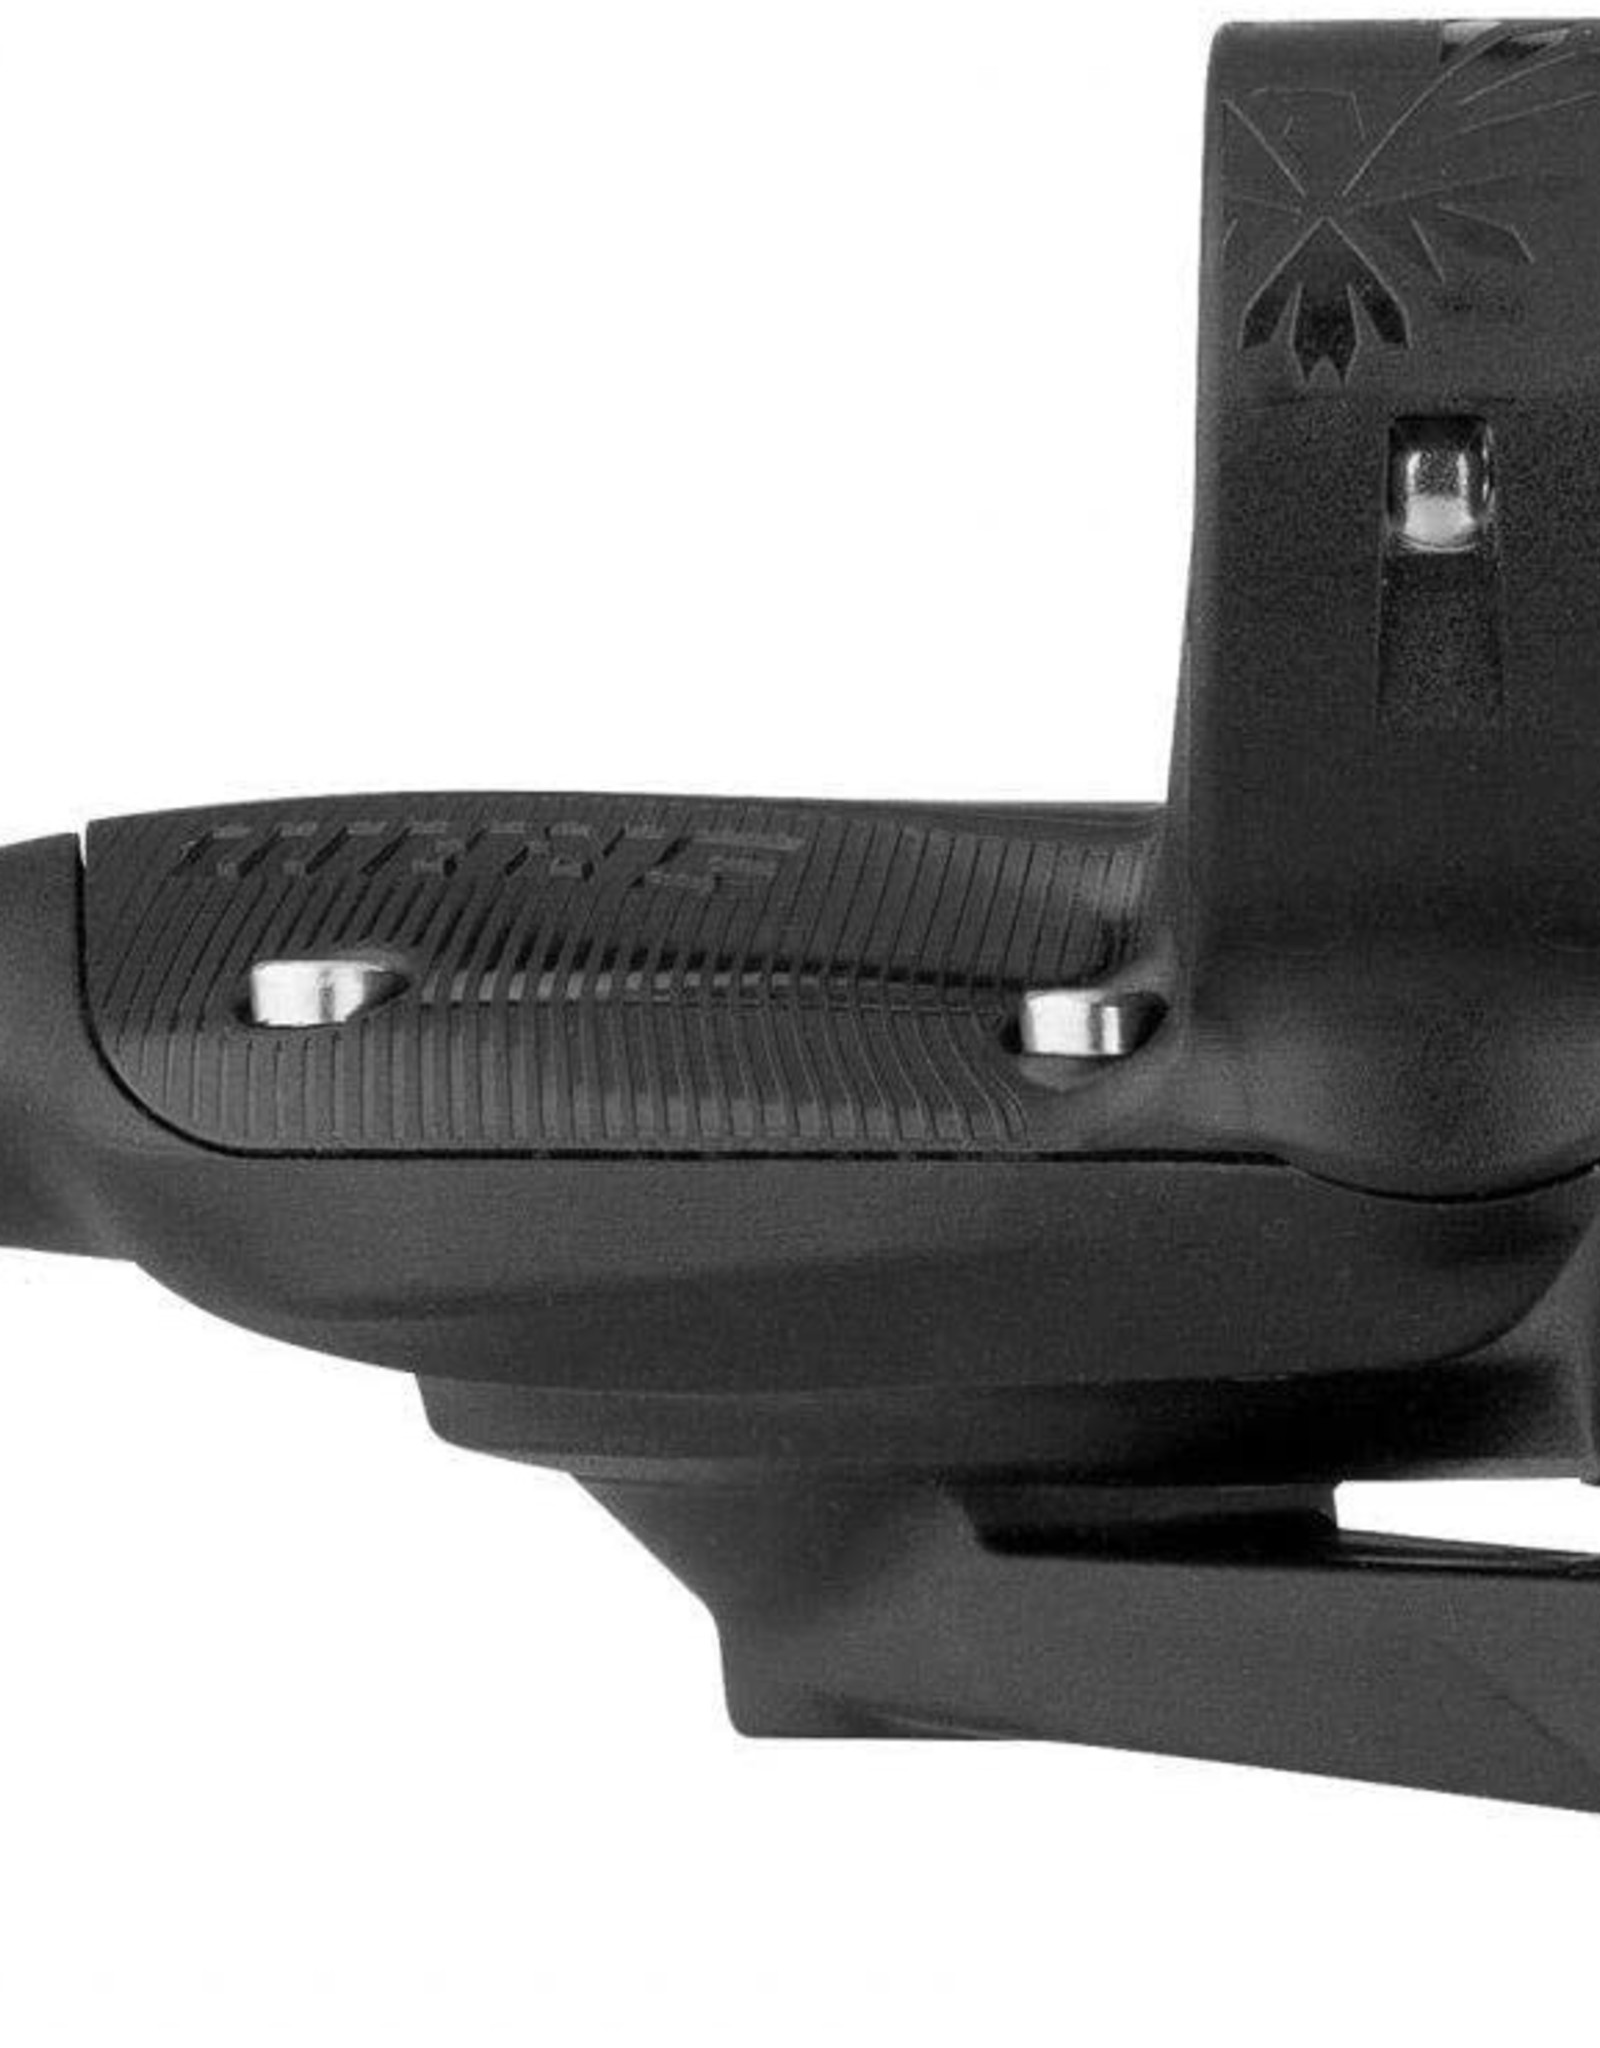 SRAM SRAM SX Eagle Rear Trigger Shifter - 12-Speed, with Discrete Clamp, Black, A1